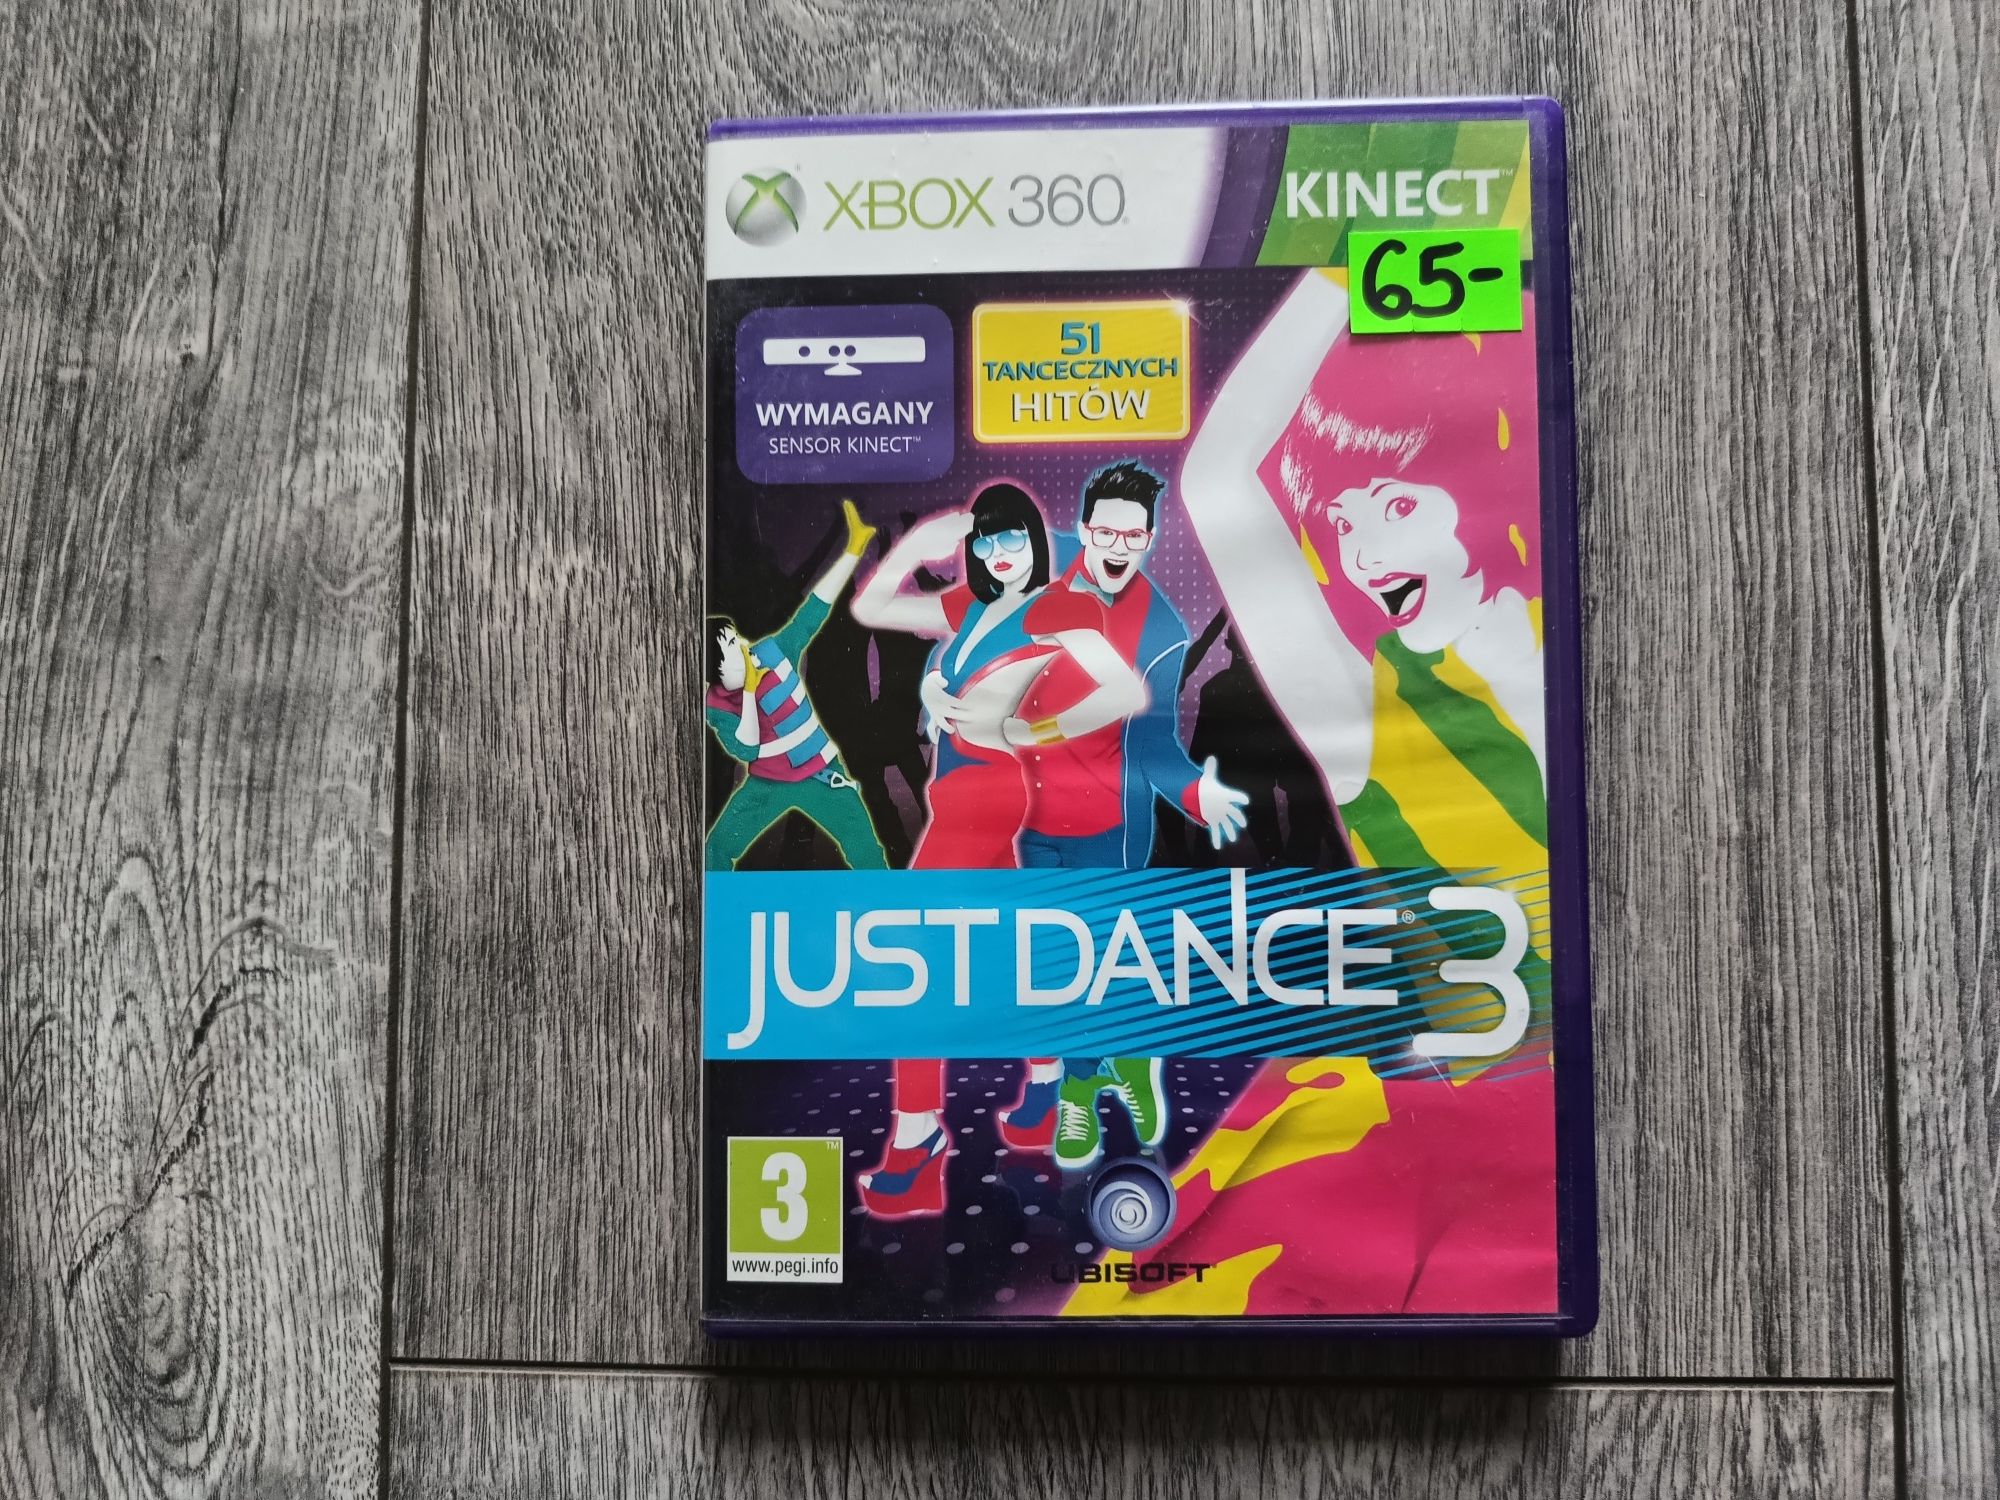 Gra Xbox 360 Just Dance 3 [PL] KINECT